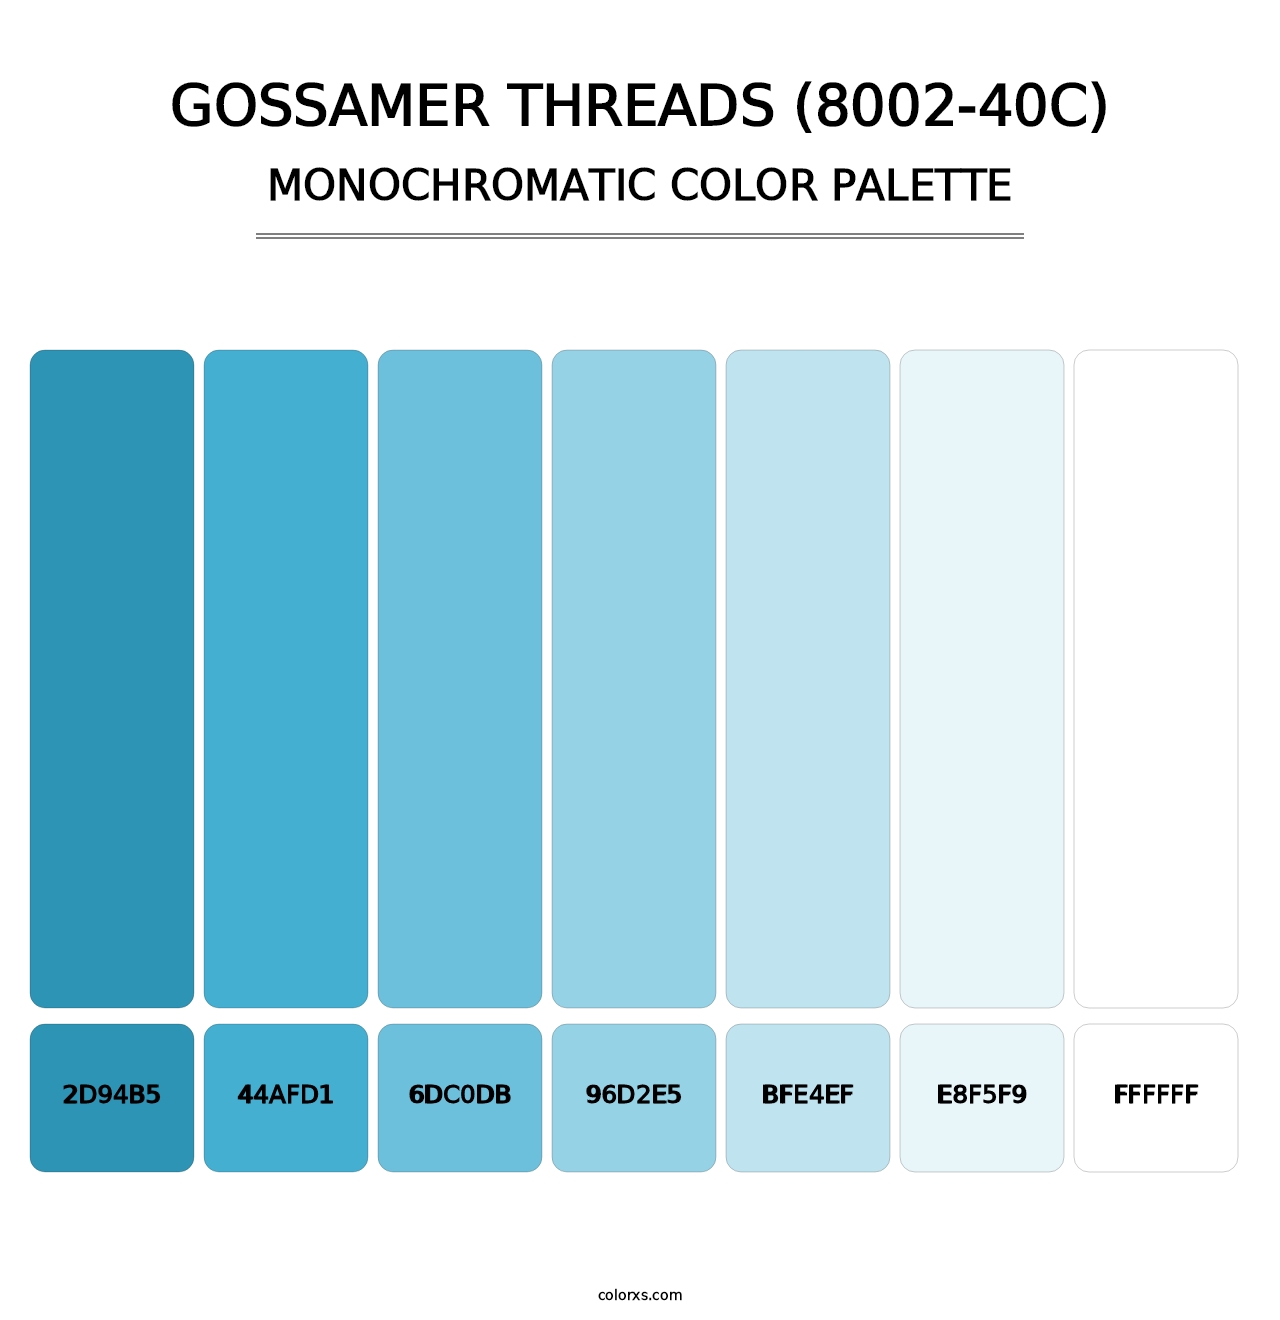 Gossamer Threads (8002-40C) - Monochromatic Color Palette